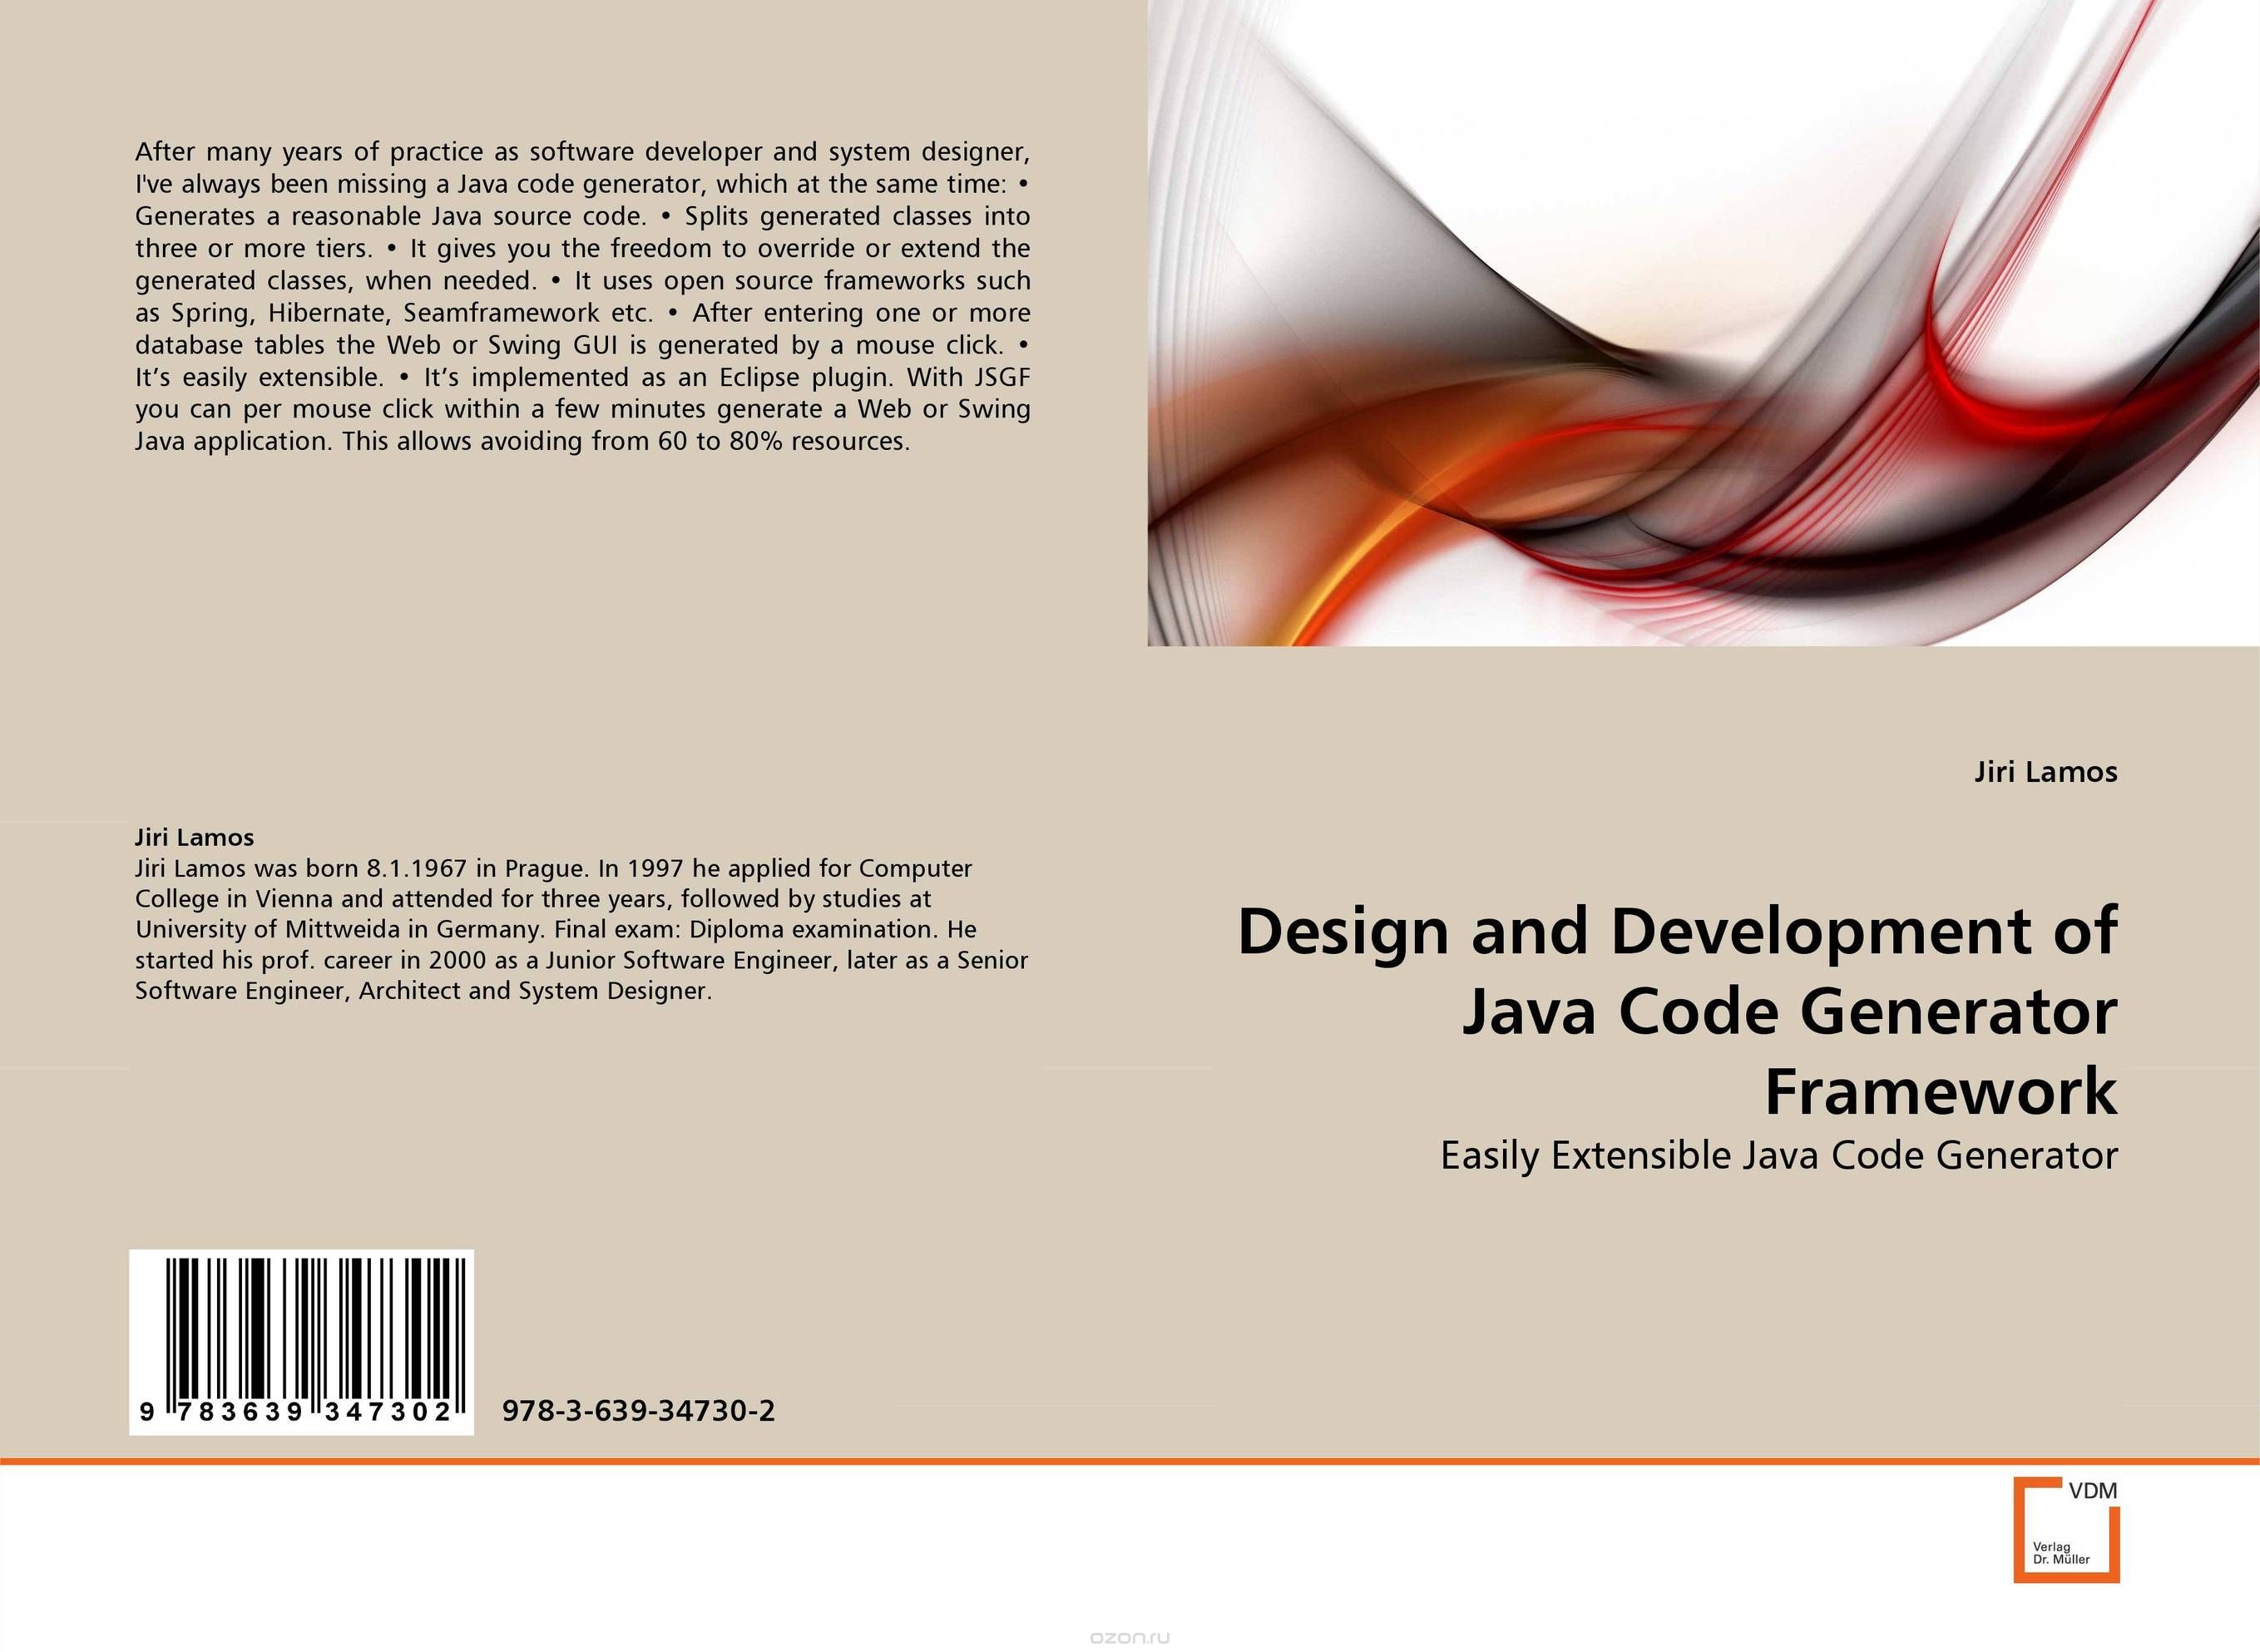 Design and Development of Java Code Generator Framework